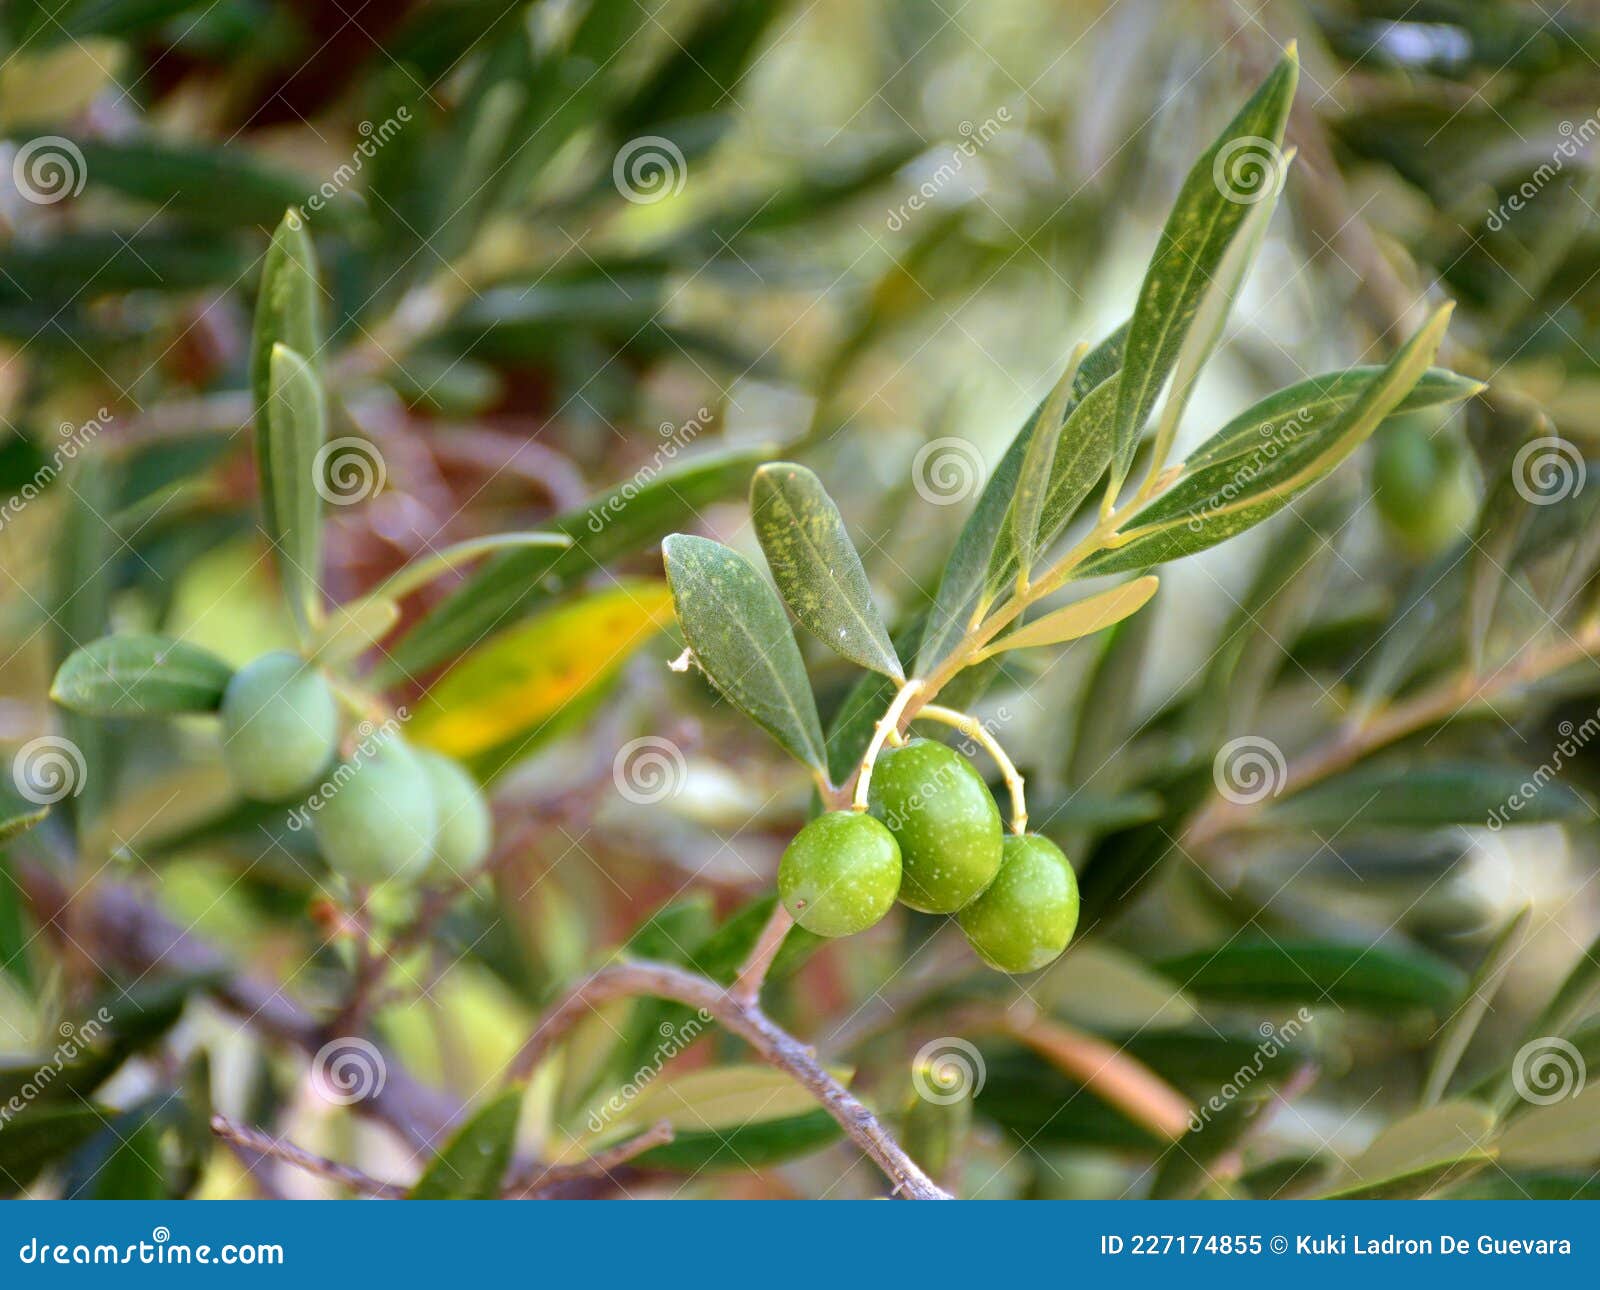 olives on an olive branch